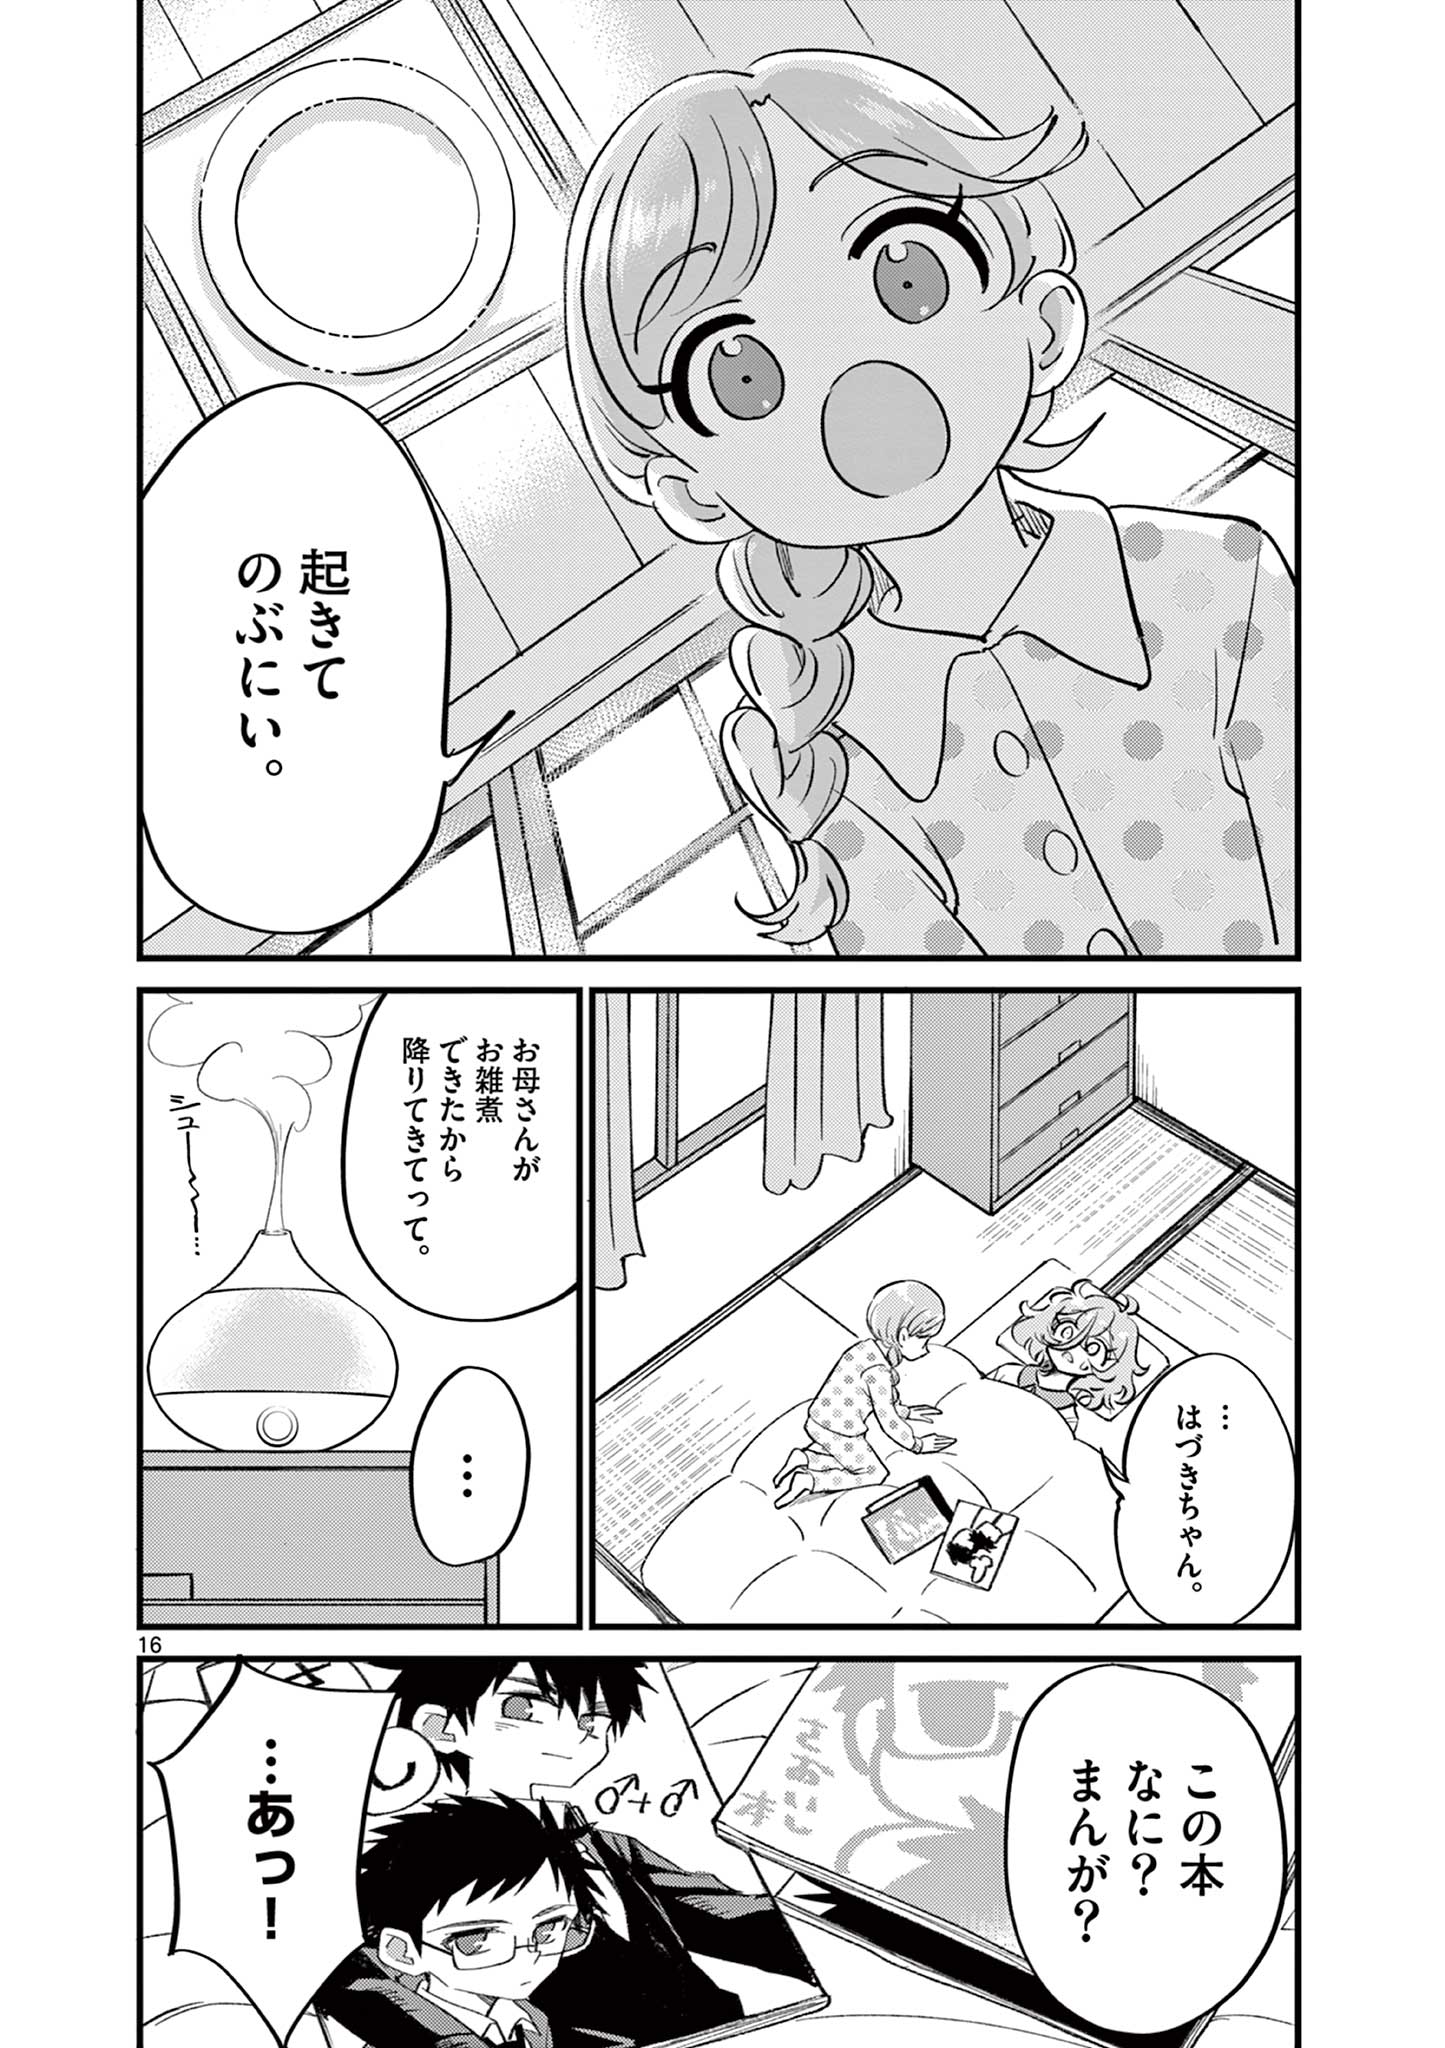 Ranka-chan wa Bitch ni Naritai - Chapter 19 - Page 16